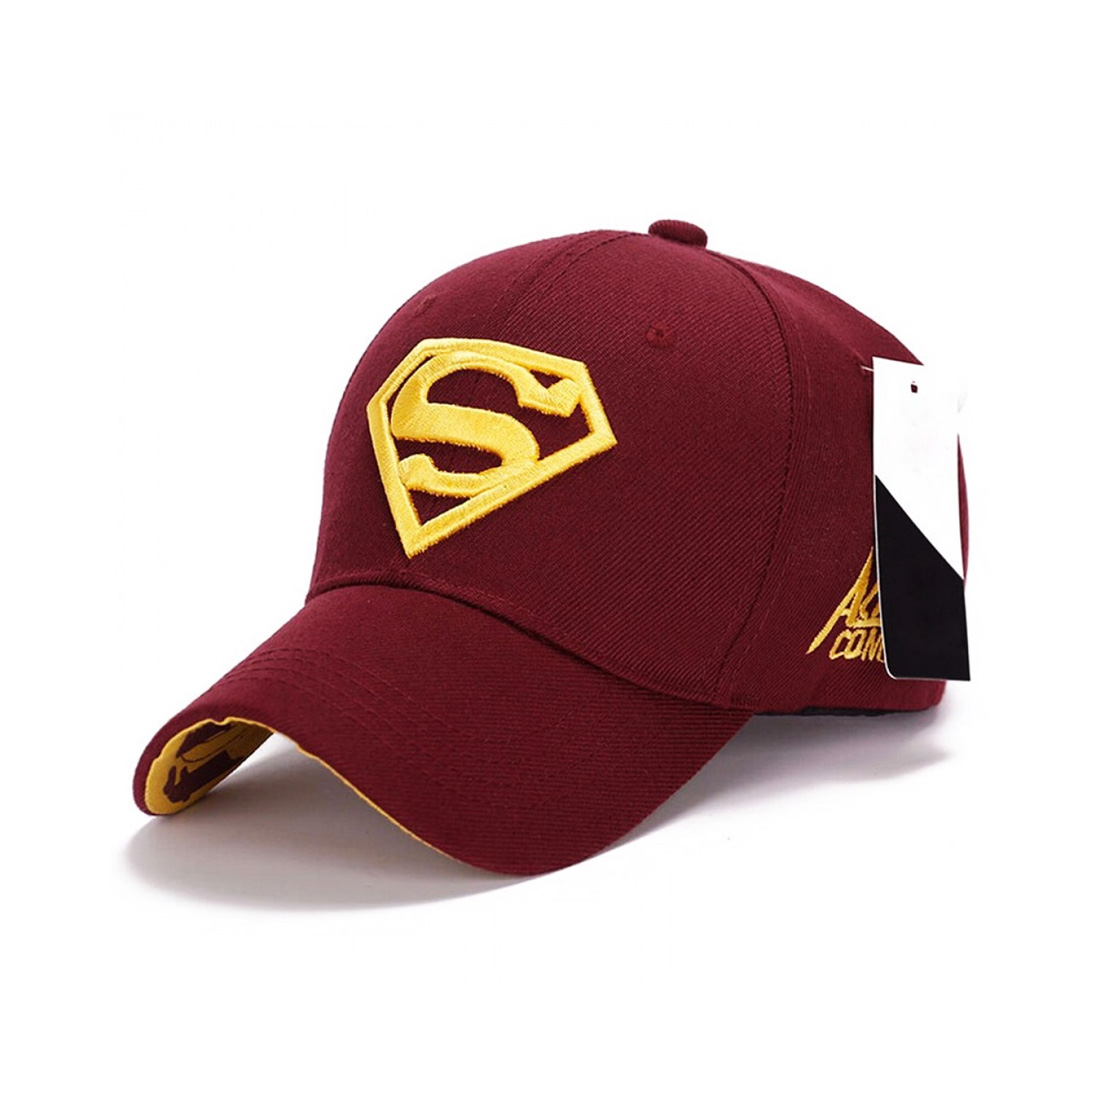 Buy Superman Baseball Sports Cap by Treemoda (Pack of 2) Online @ ₹1245 ...